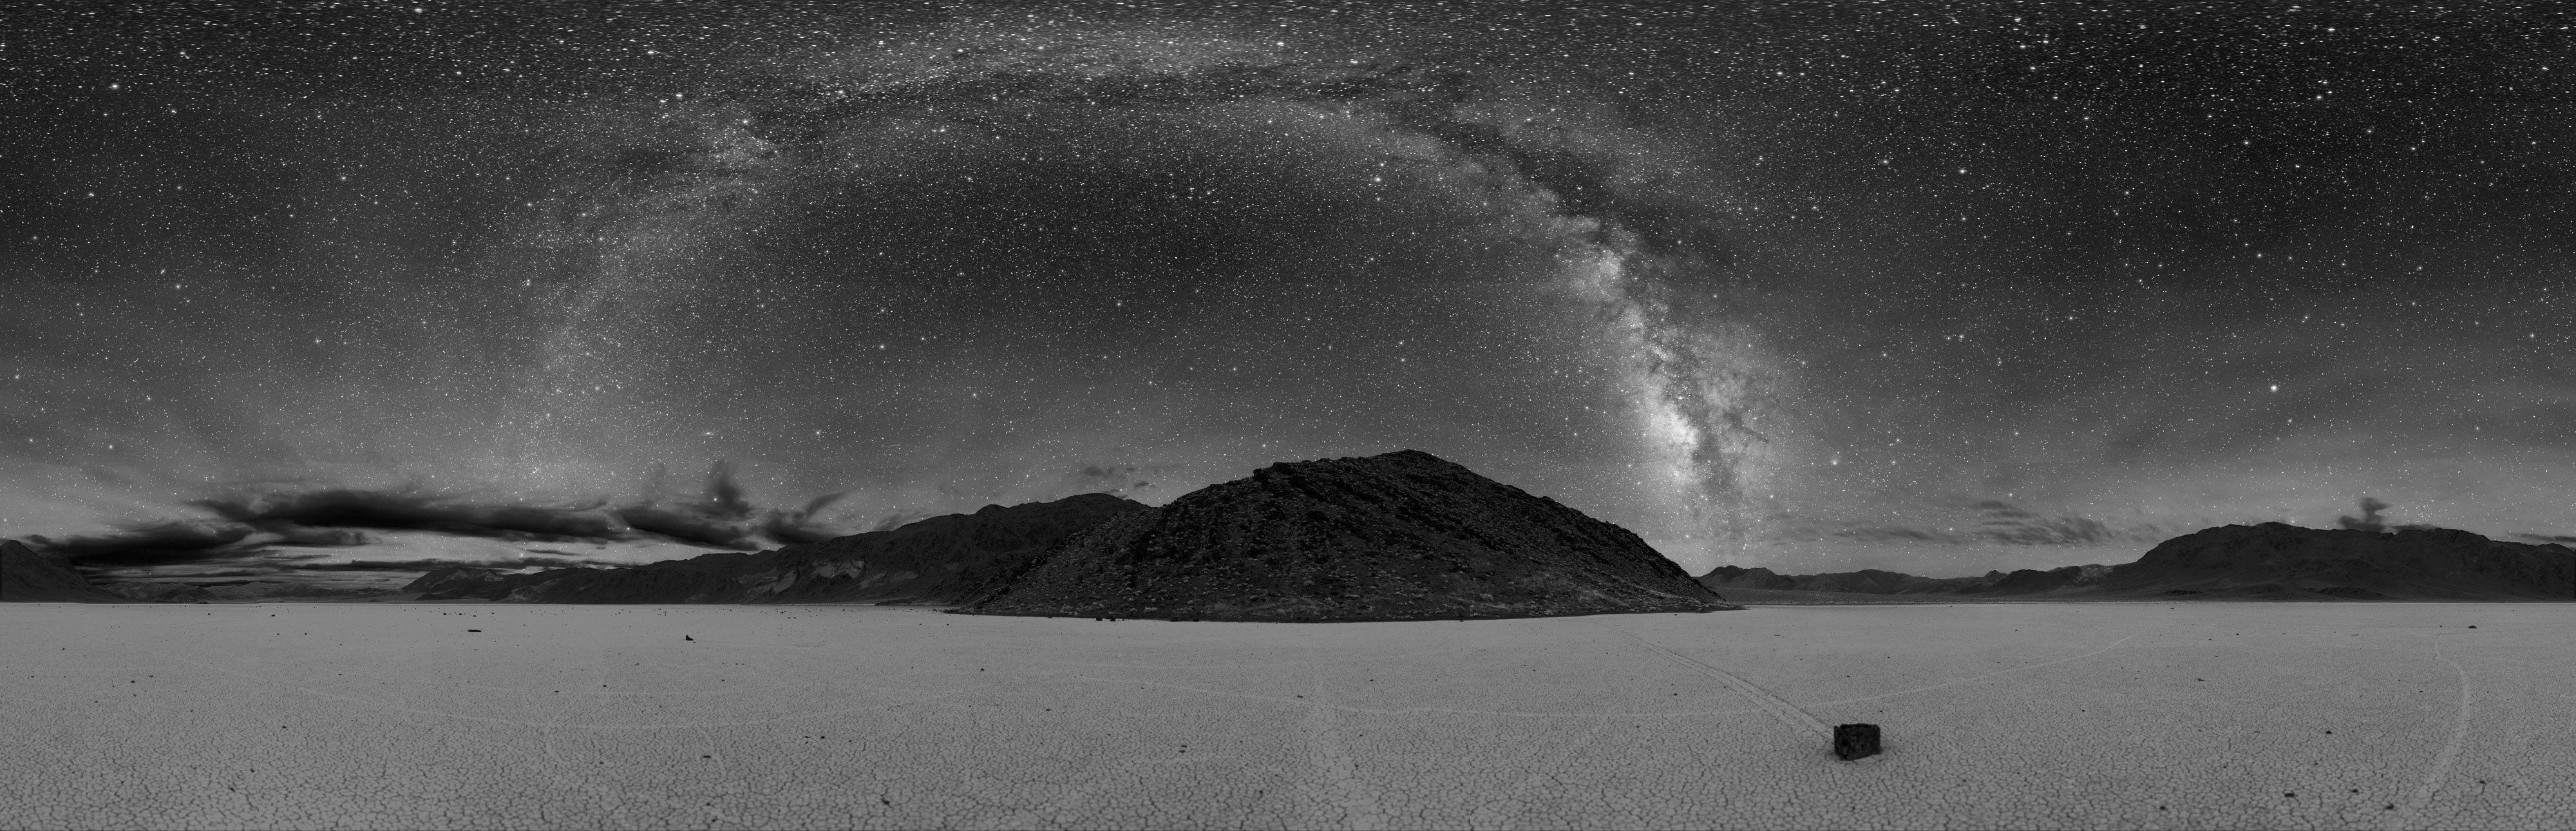 APOD: 2008 July 13 - A Dark Sky Over Death Valley